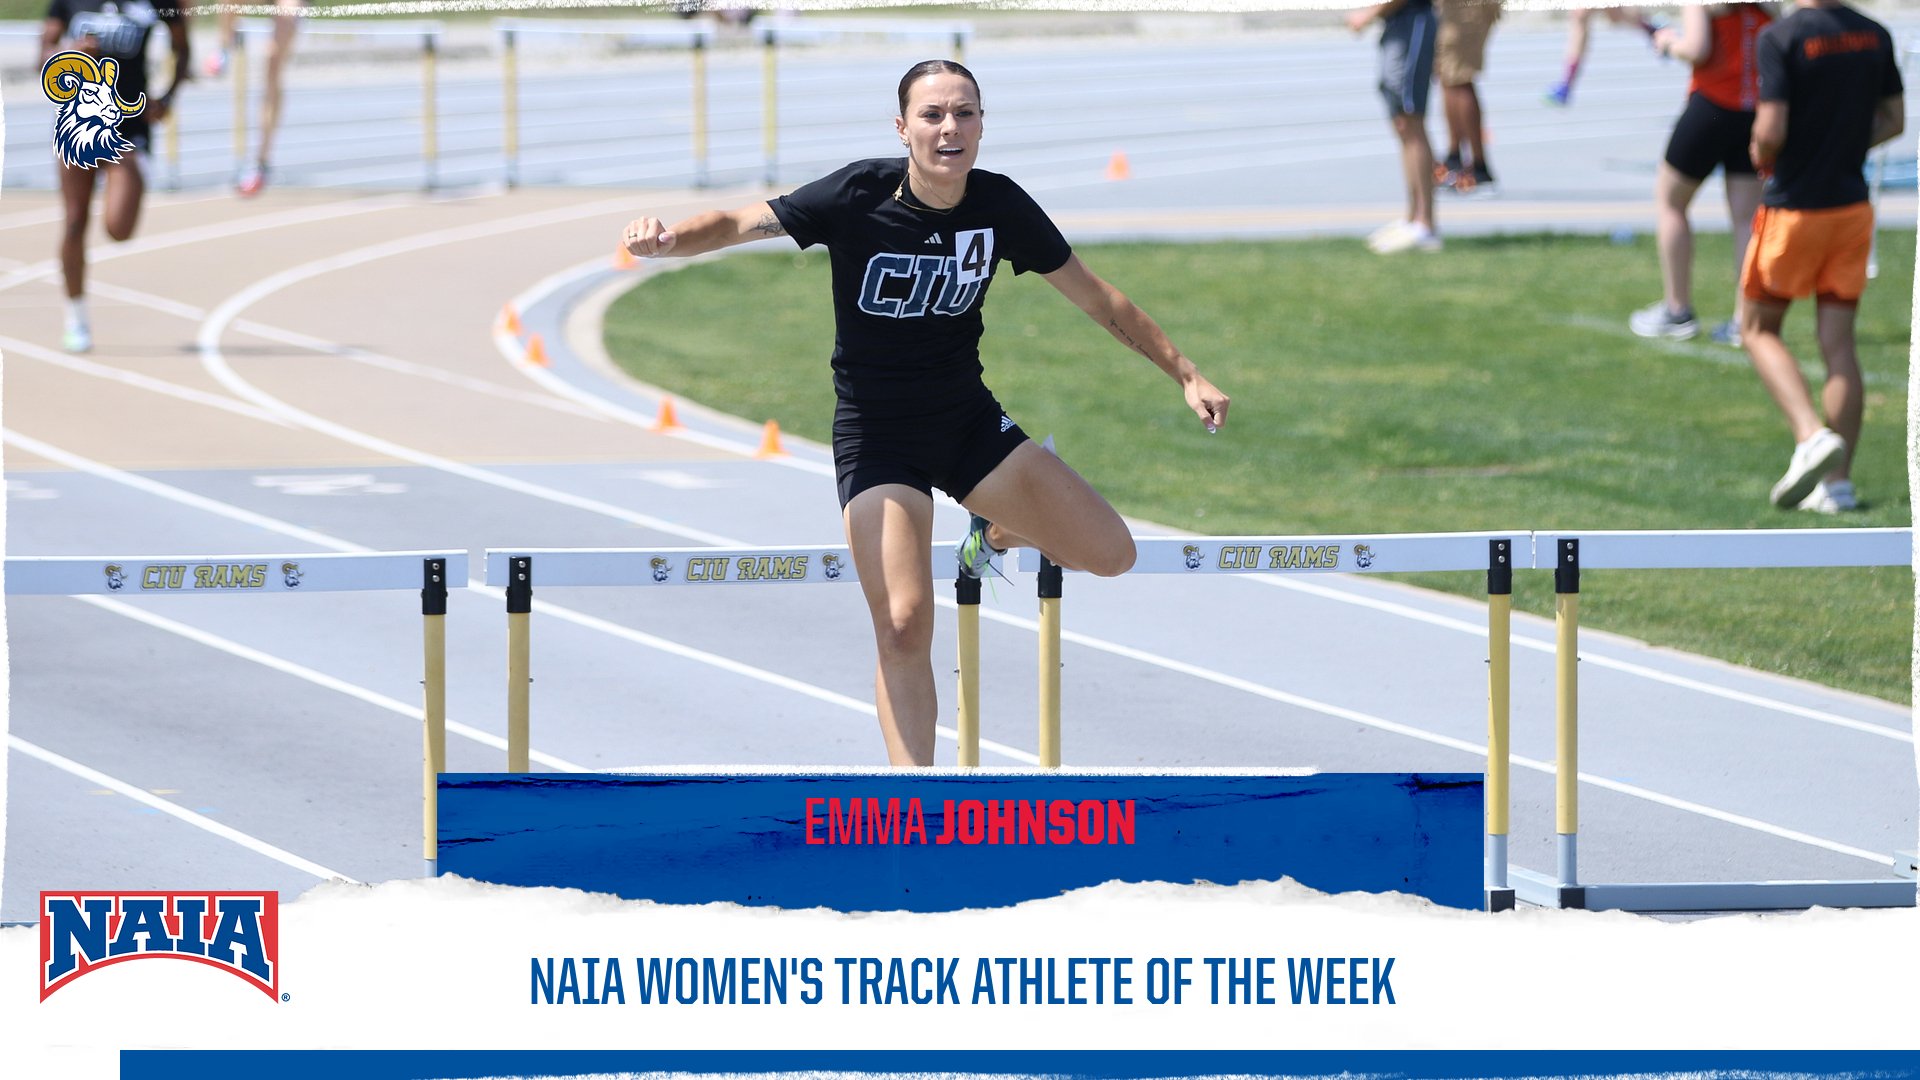 CIU's Johnson Earns NAIA Track Athlete of the Week Honors